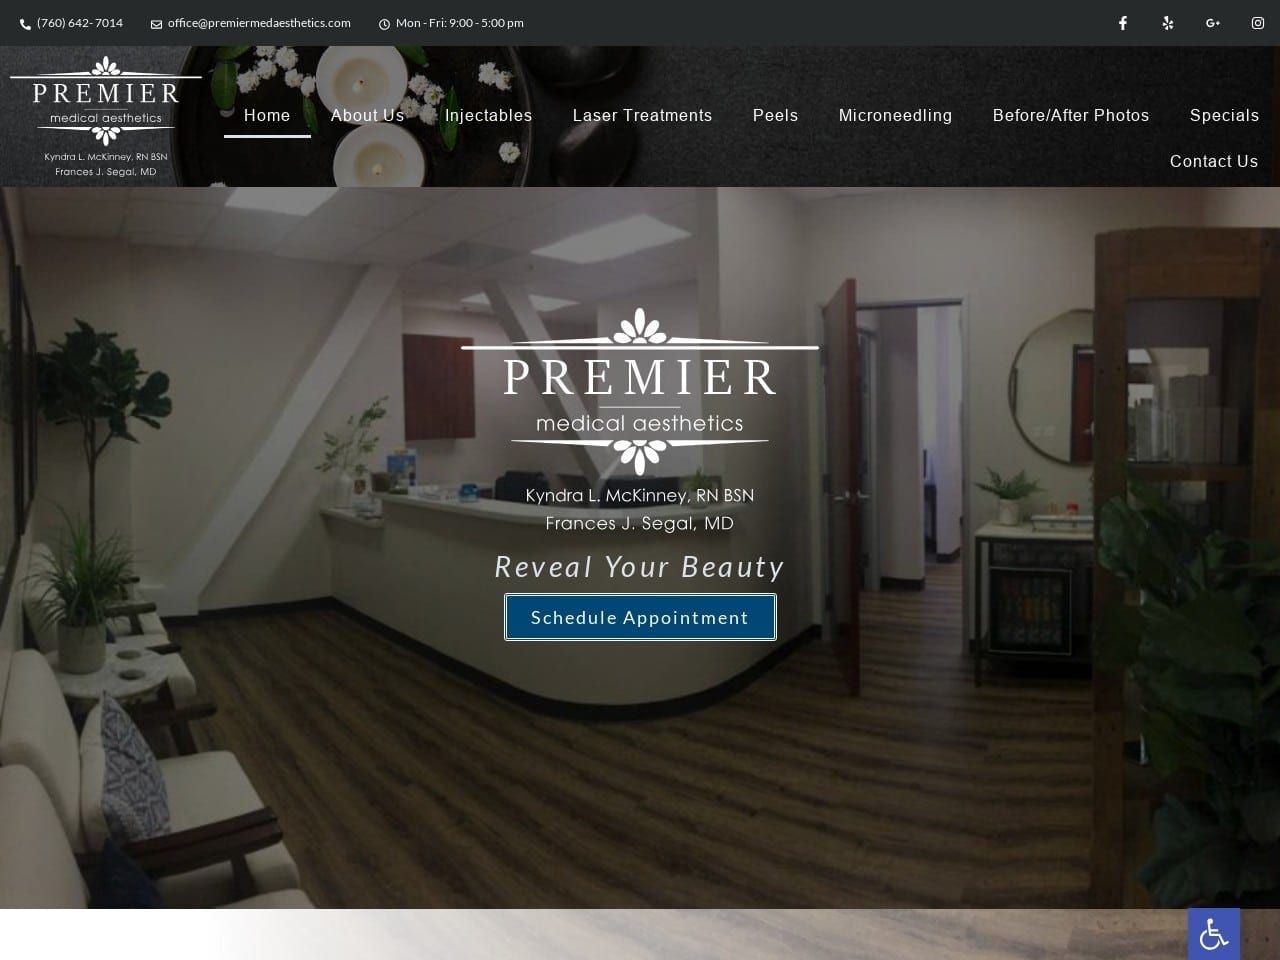 Premier Medical Aesthetics Website Screenshot From Url Premiermedaesthetics.com